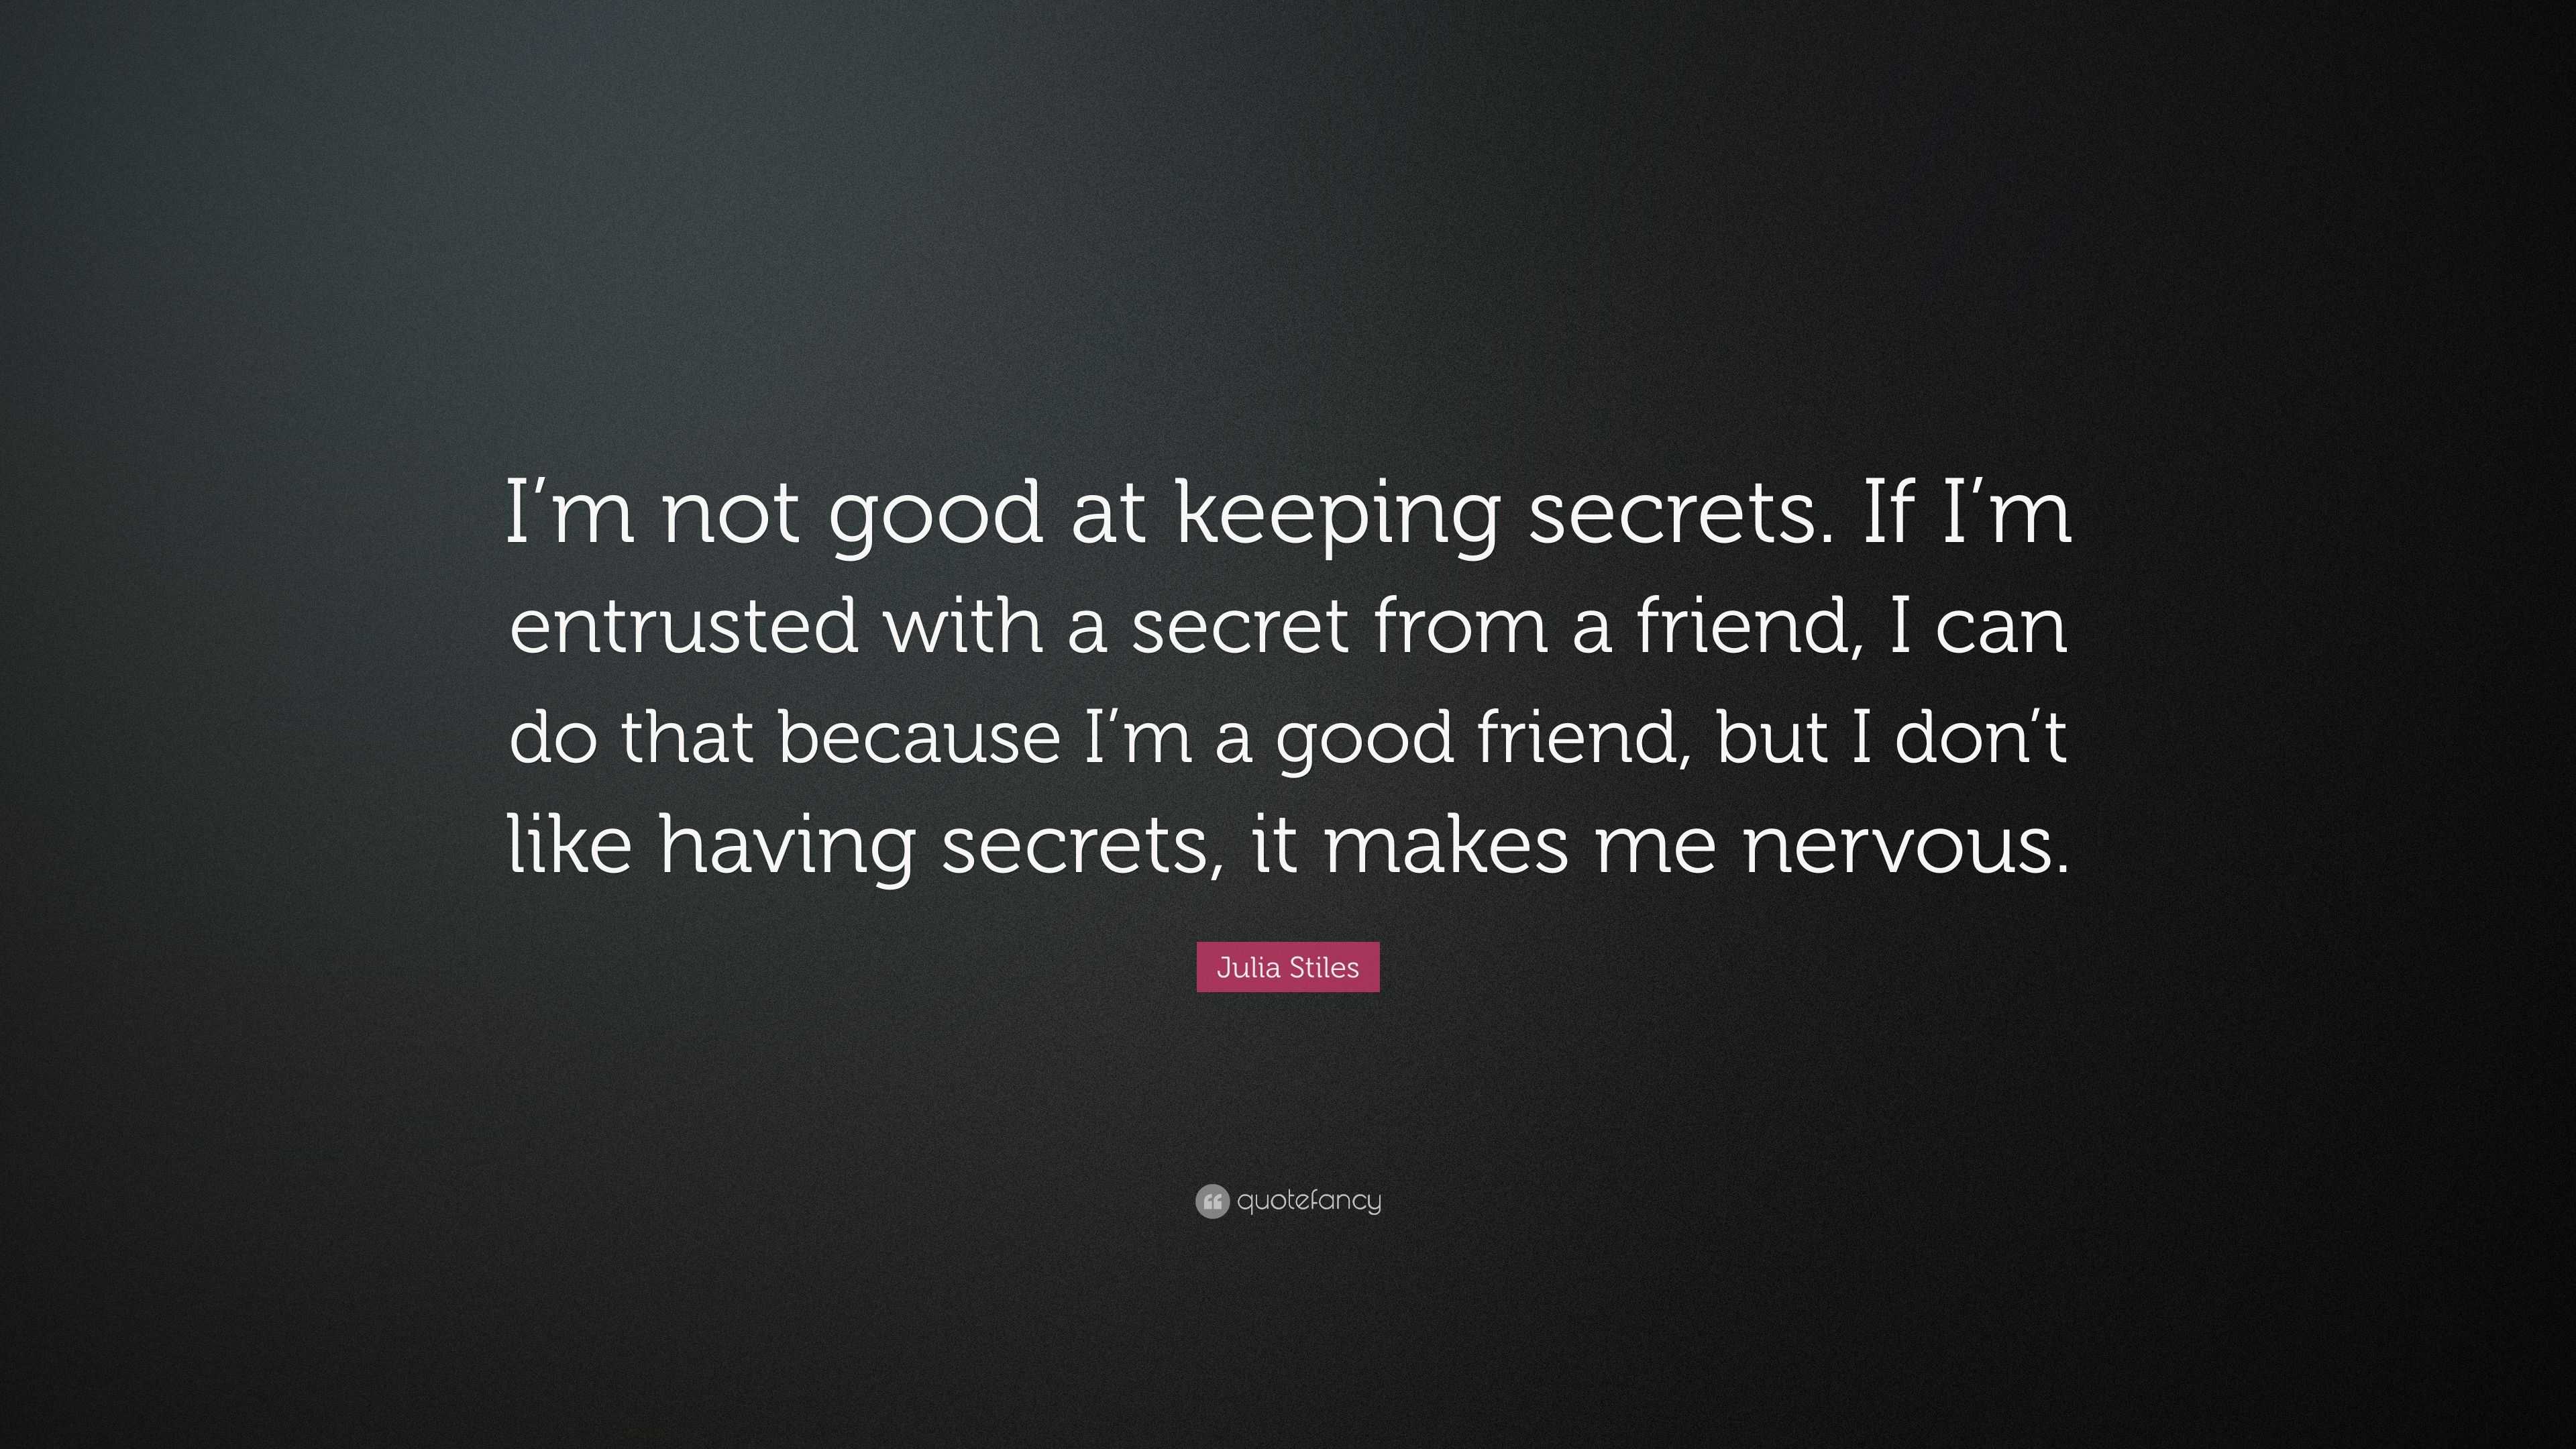 Quotes about having secrets